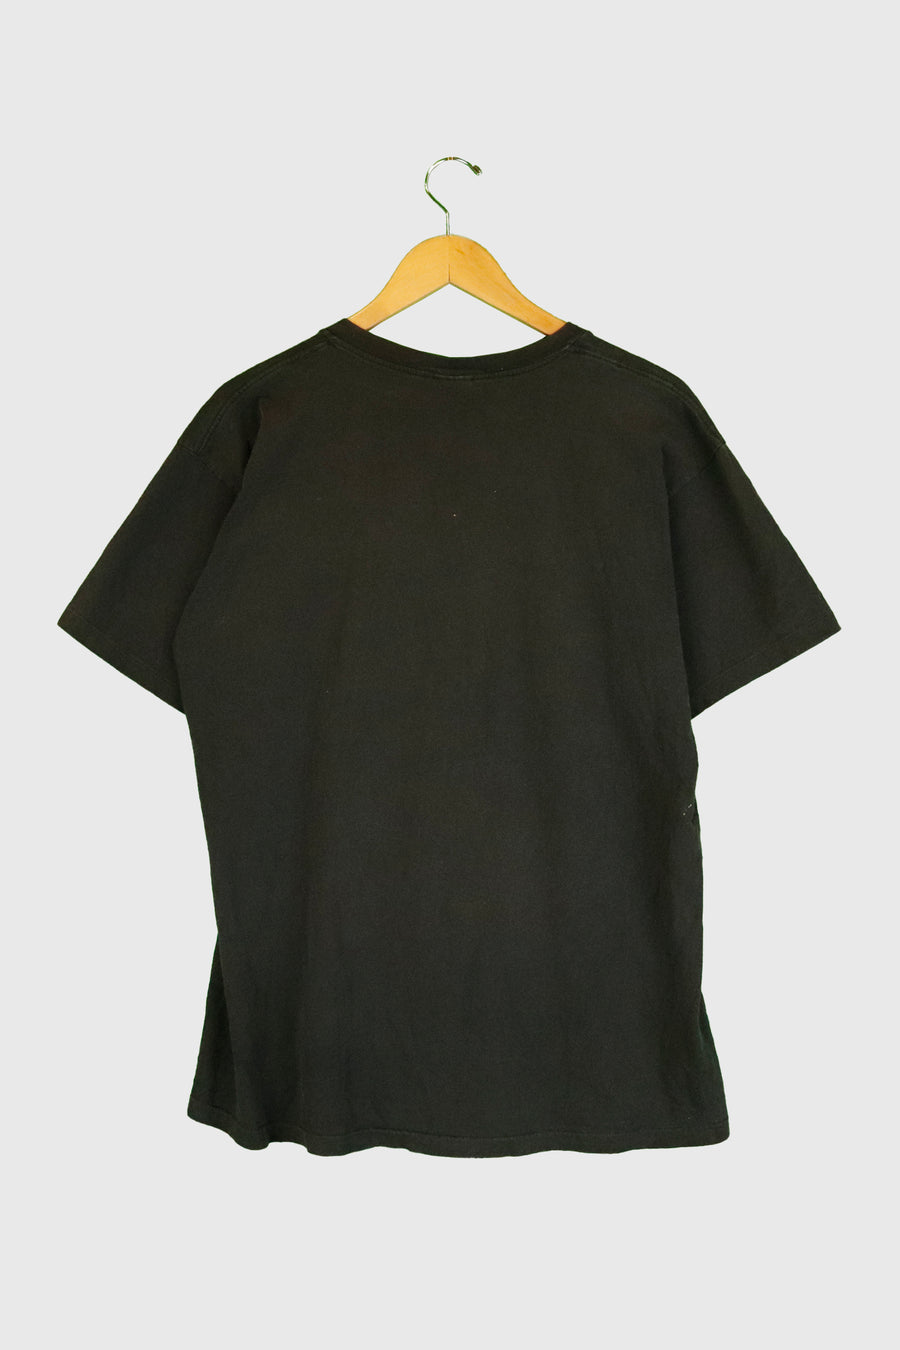 Vintage Nike Mount Dunkmore T Shirt Sz XL